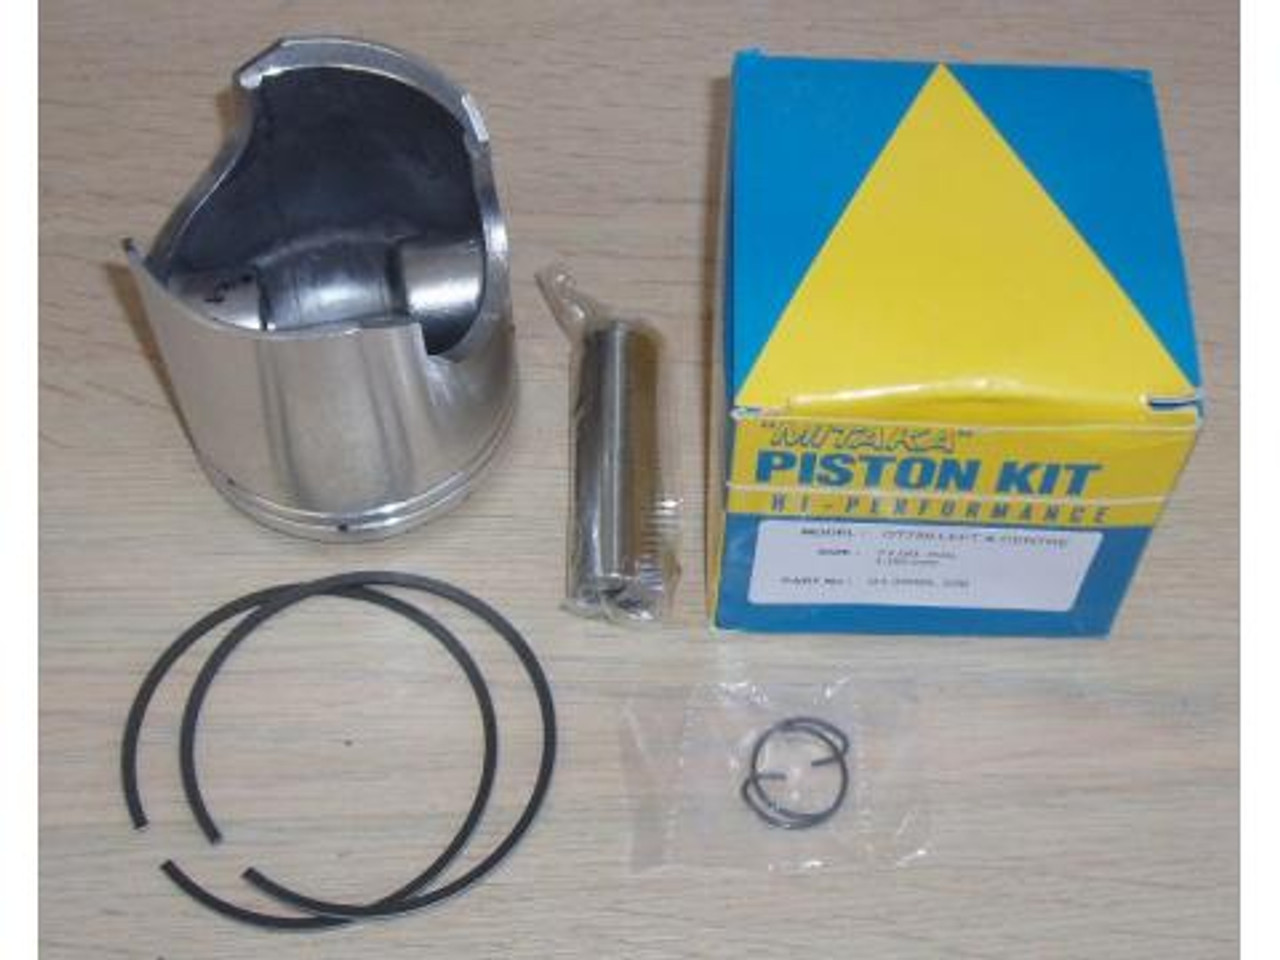 Re-Bore Block and Supply a full set of Mitaka Piston Kits.